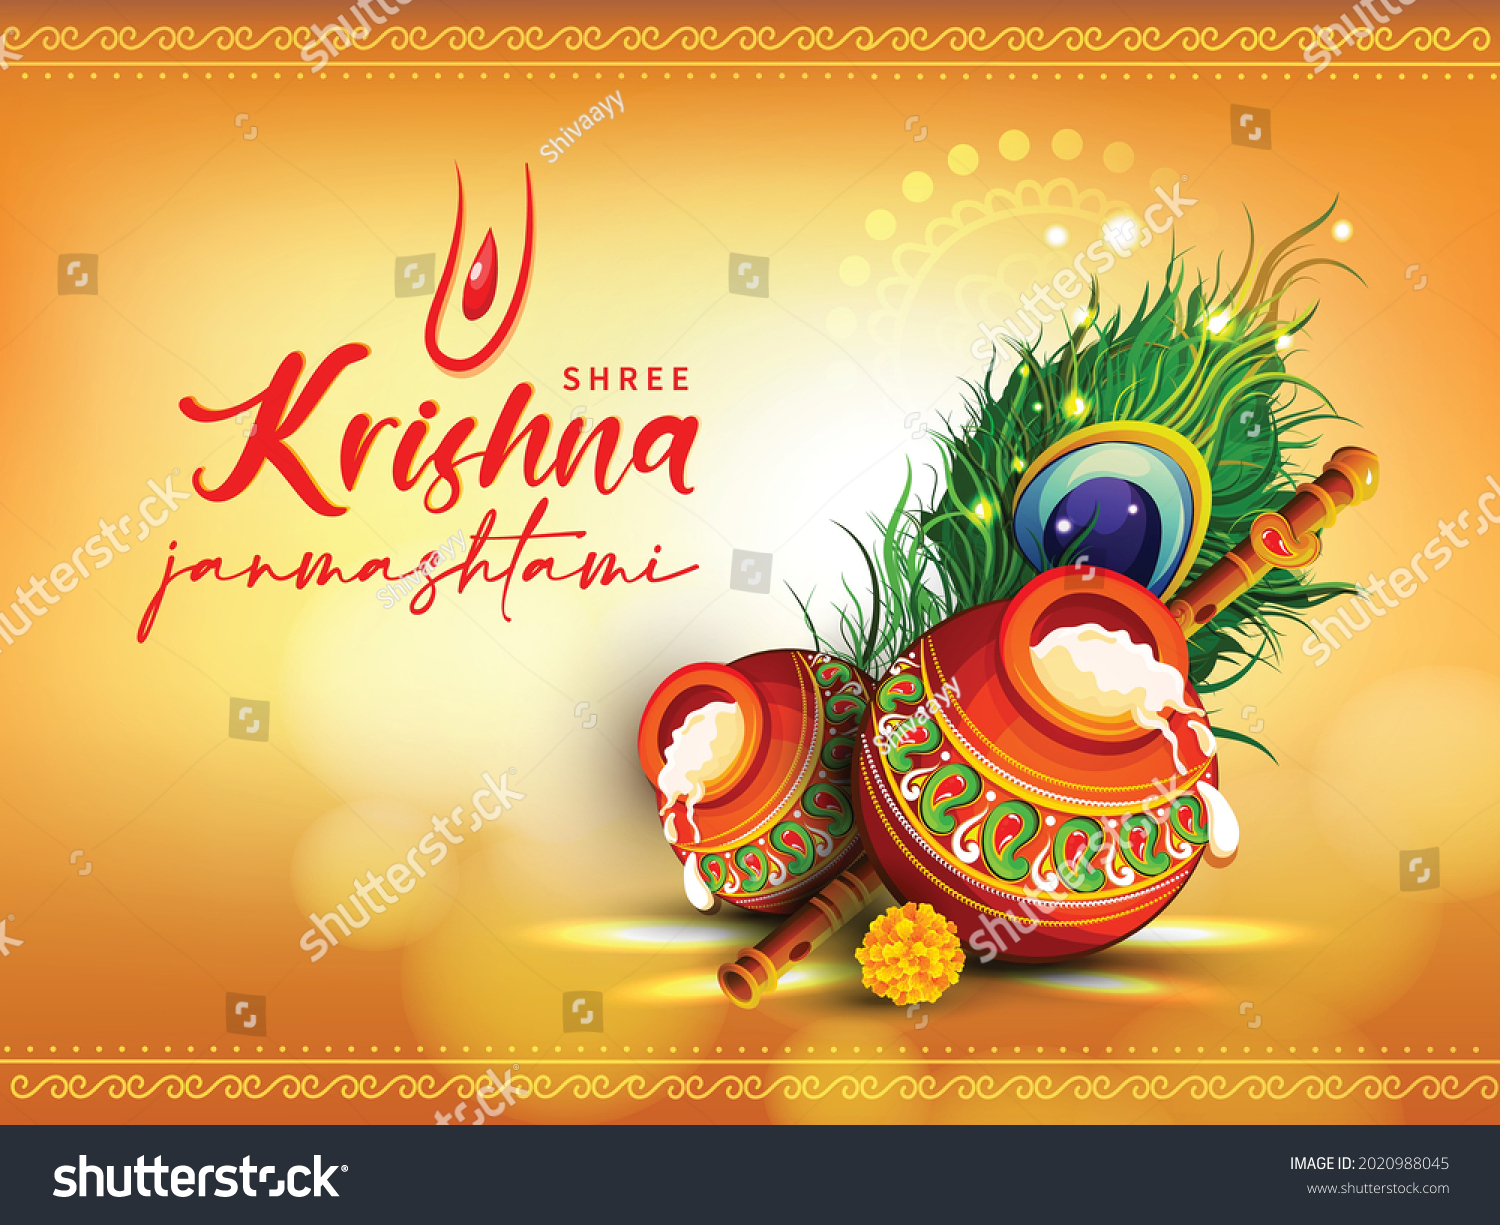 Vishnu banner Images, Stock Photos & Vectors | Shutterstock